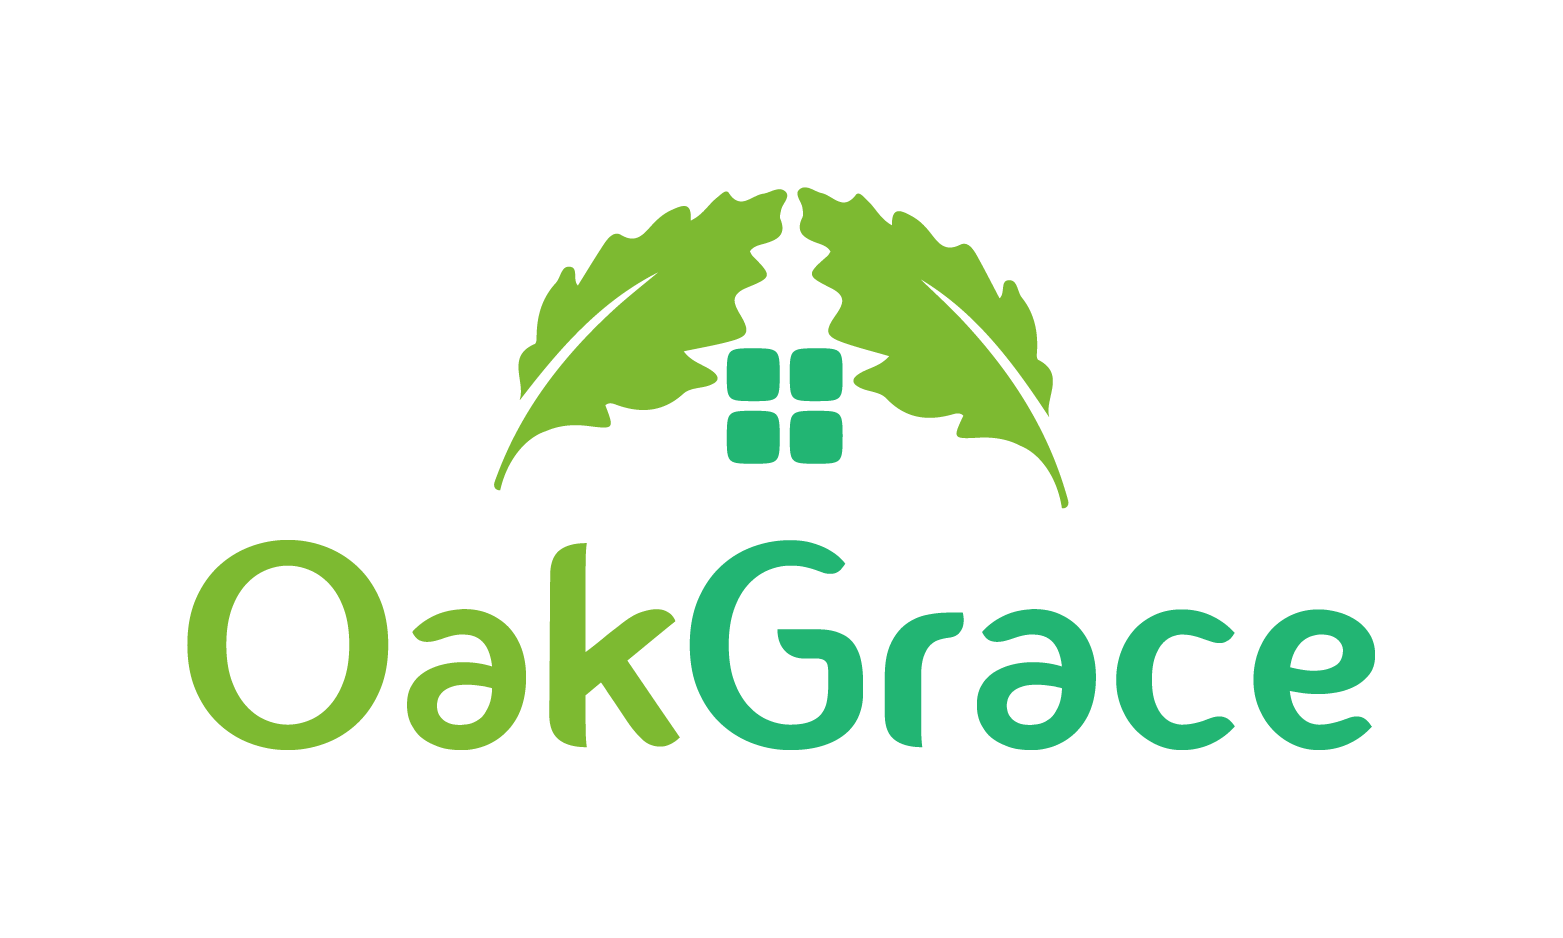 OakGrace.com - Creative brandable domain for sale